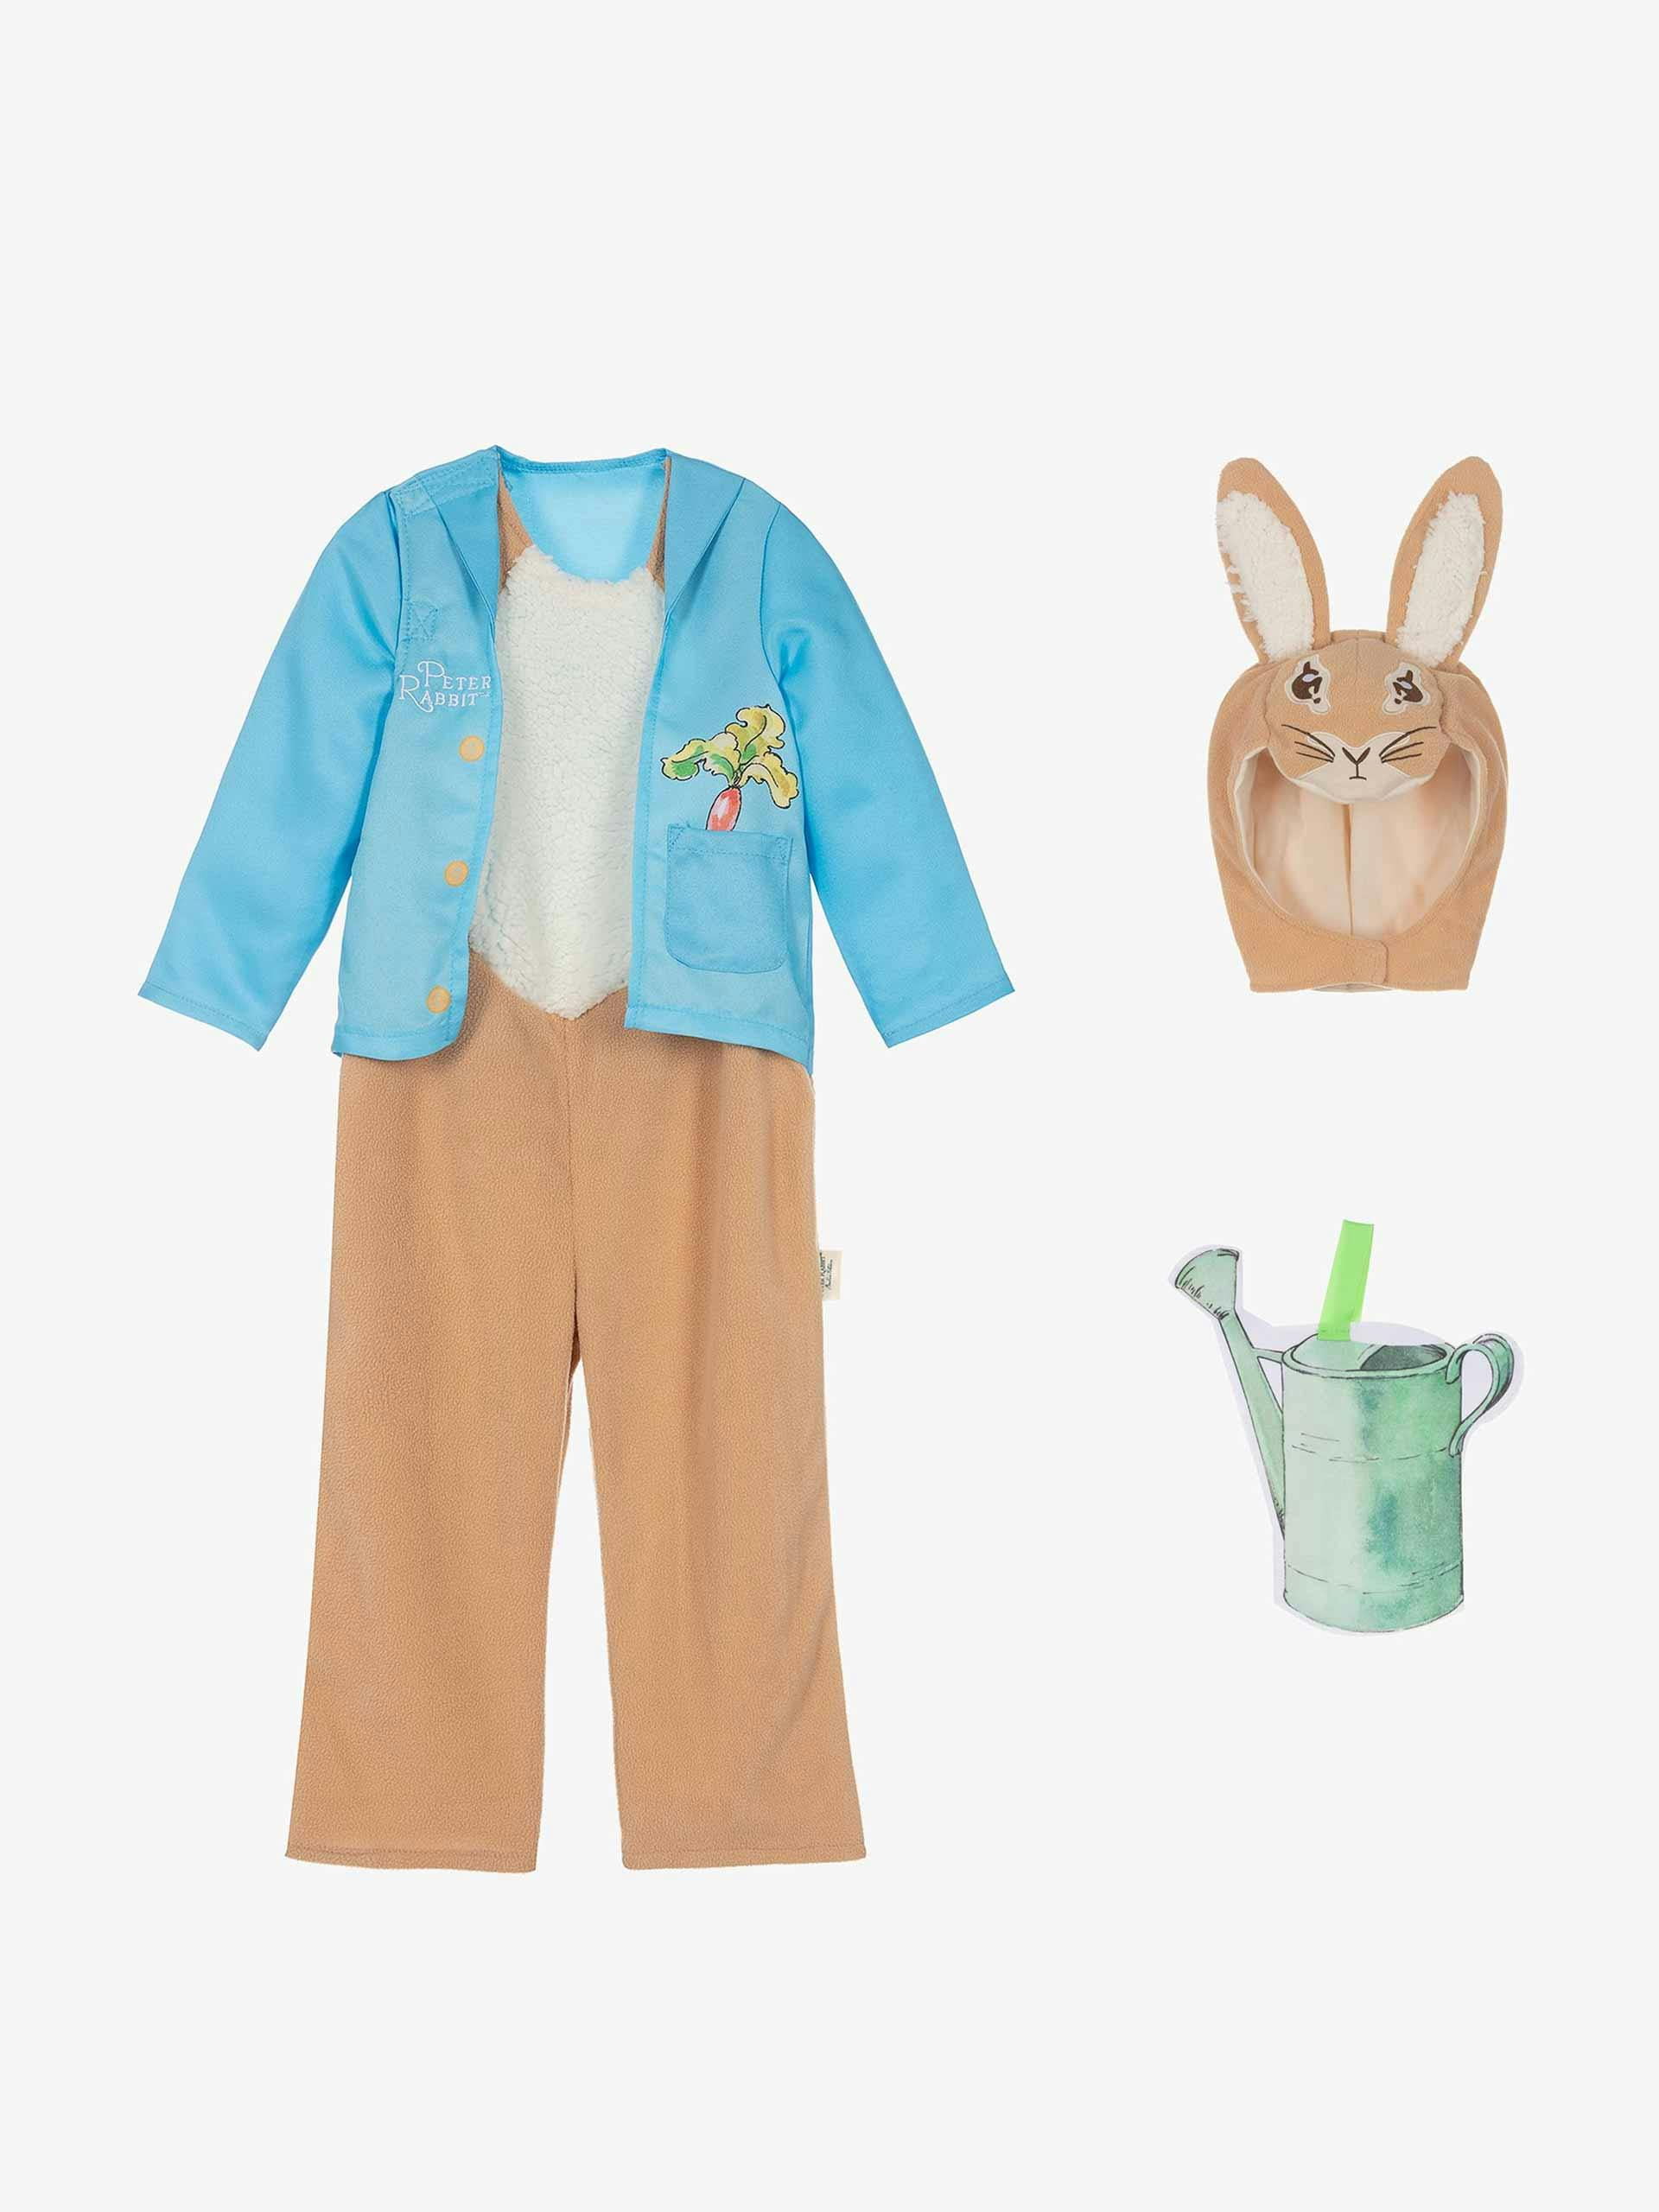 Peter Rabbit costume